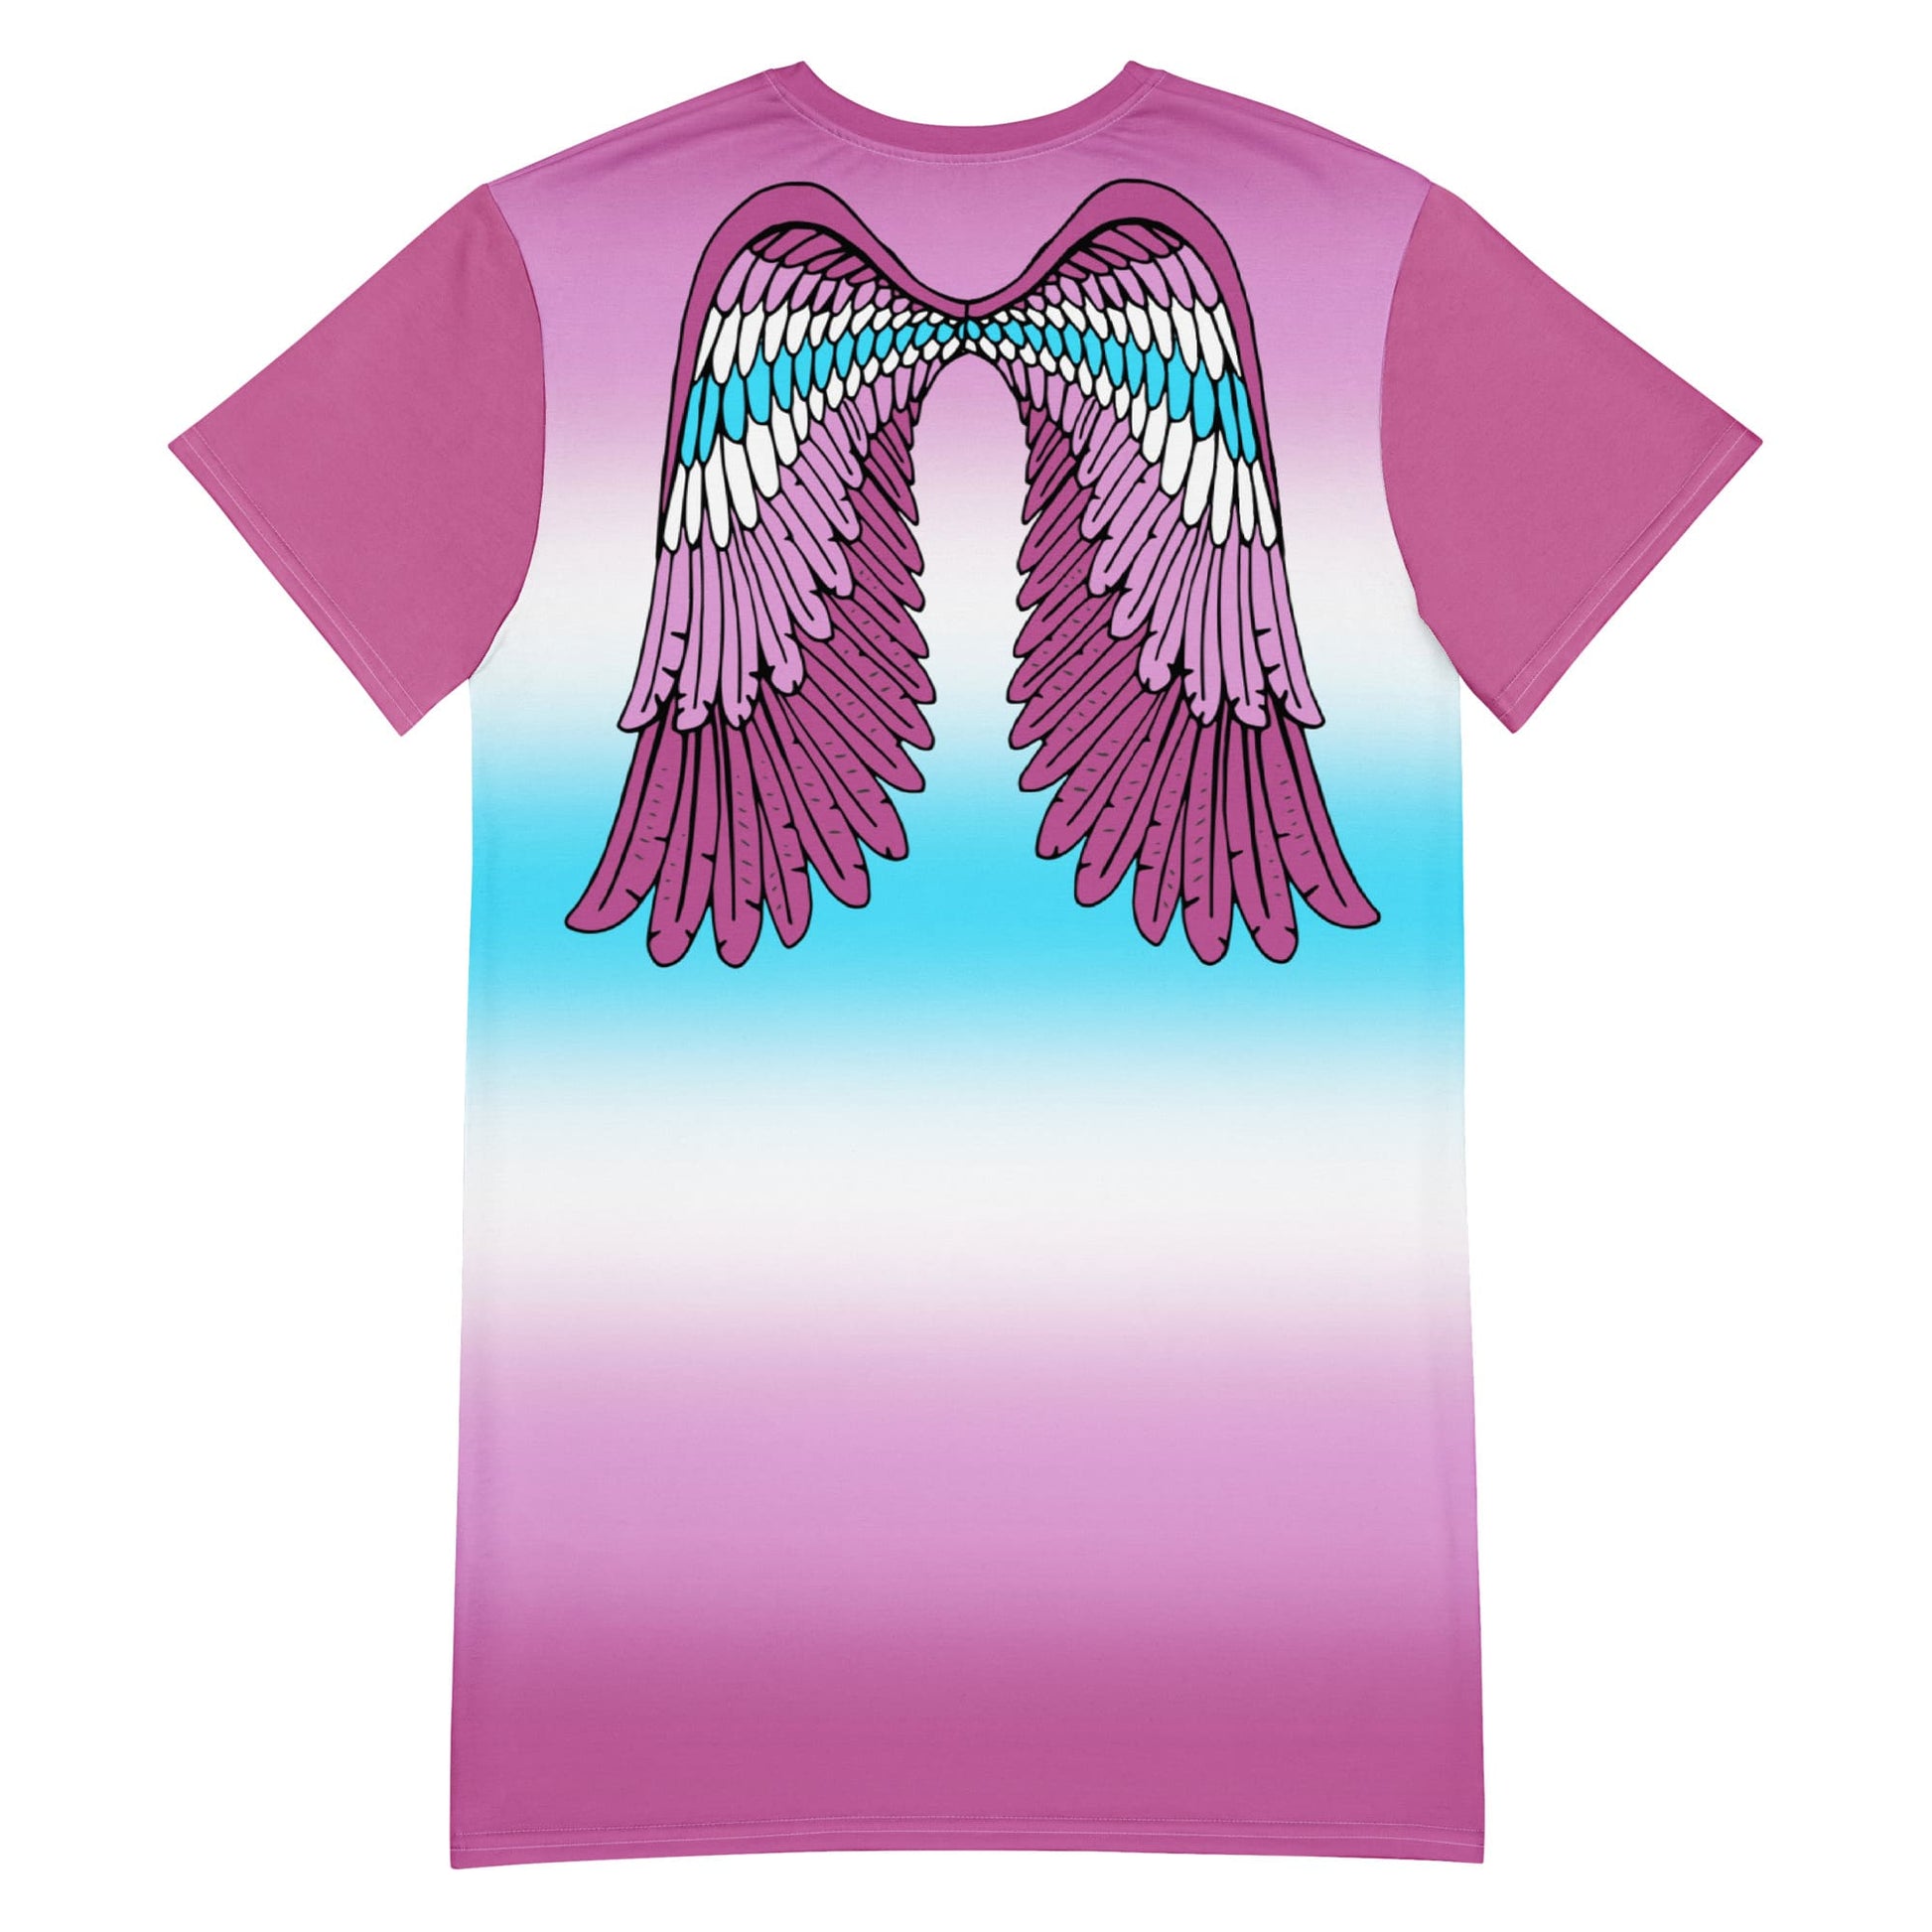 femboy tshirt dress, cute angel wings on the back, flatlay back